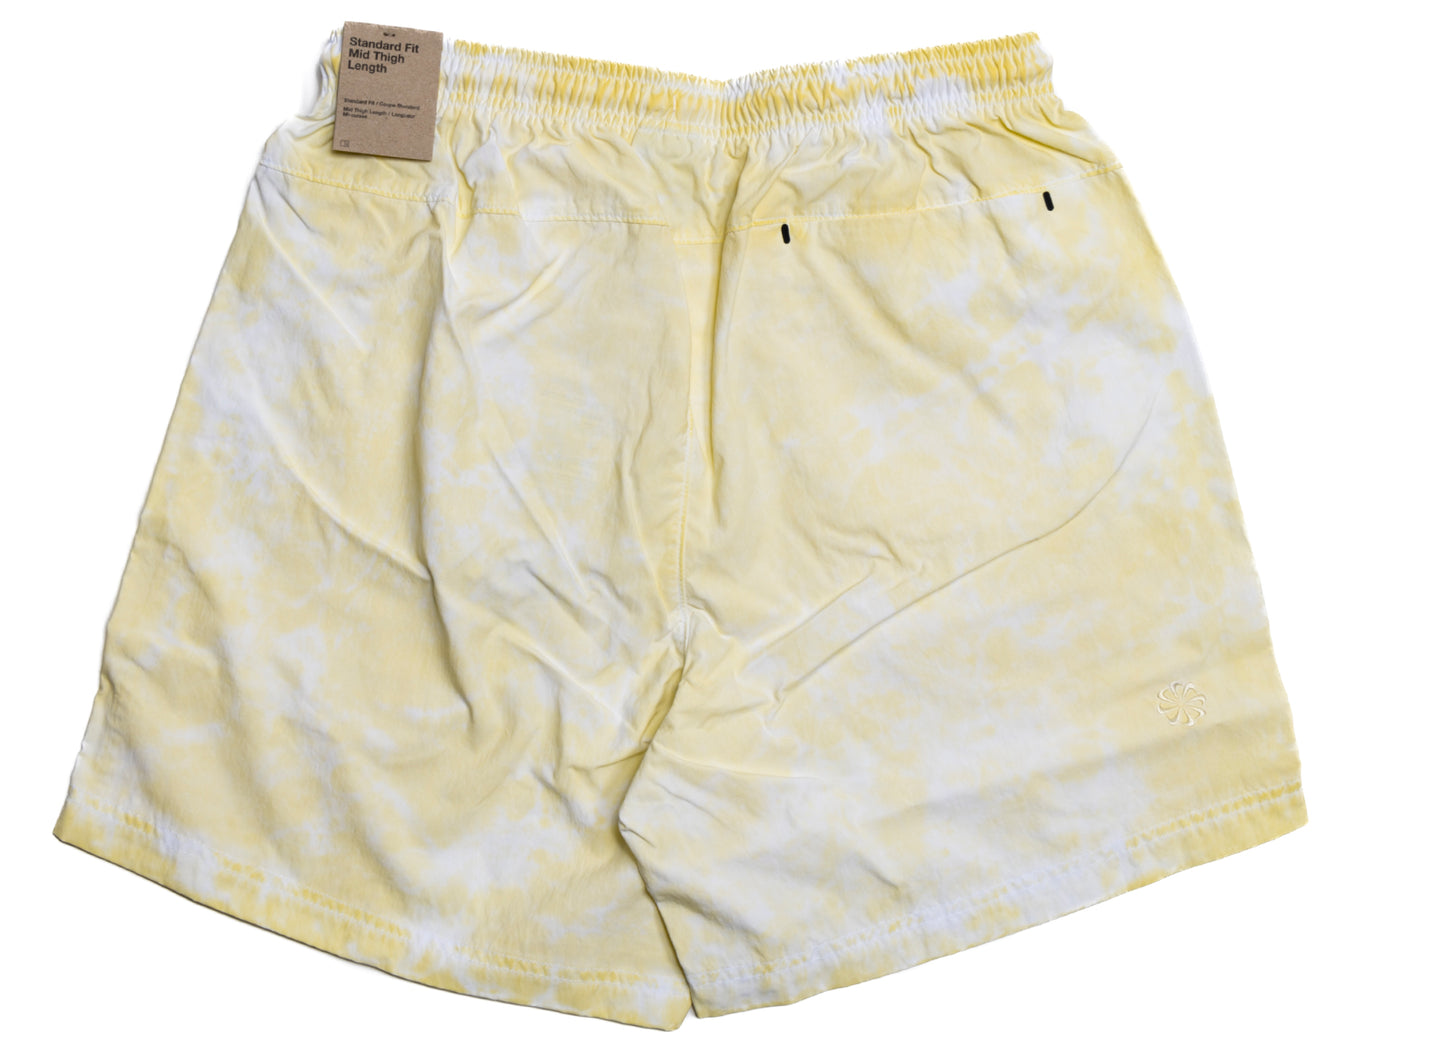 Nike Sportswear Move to Zero Tie Dye Yellow and White Shorts